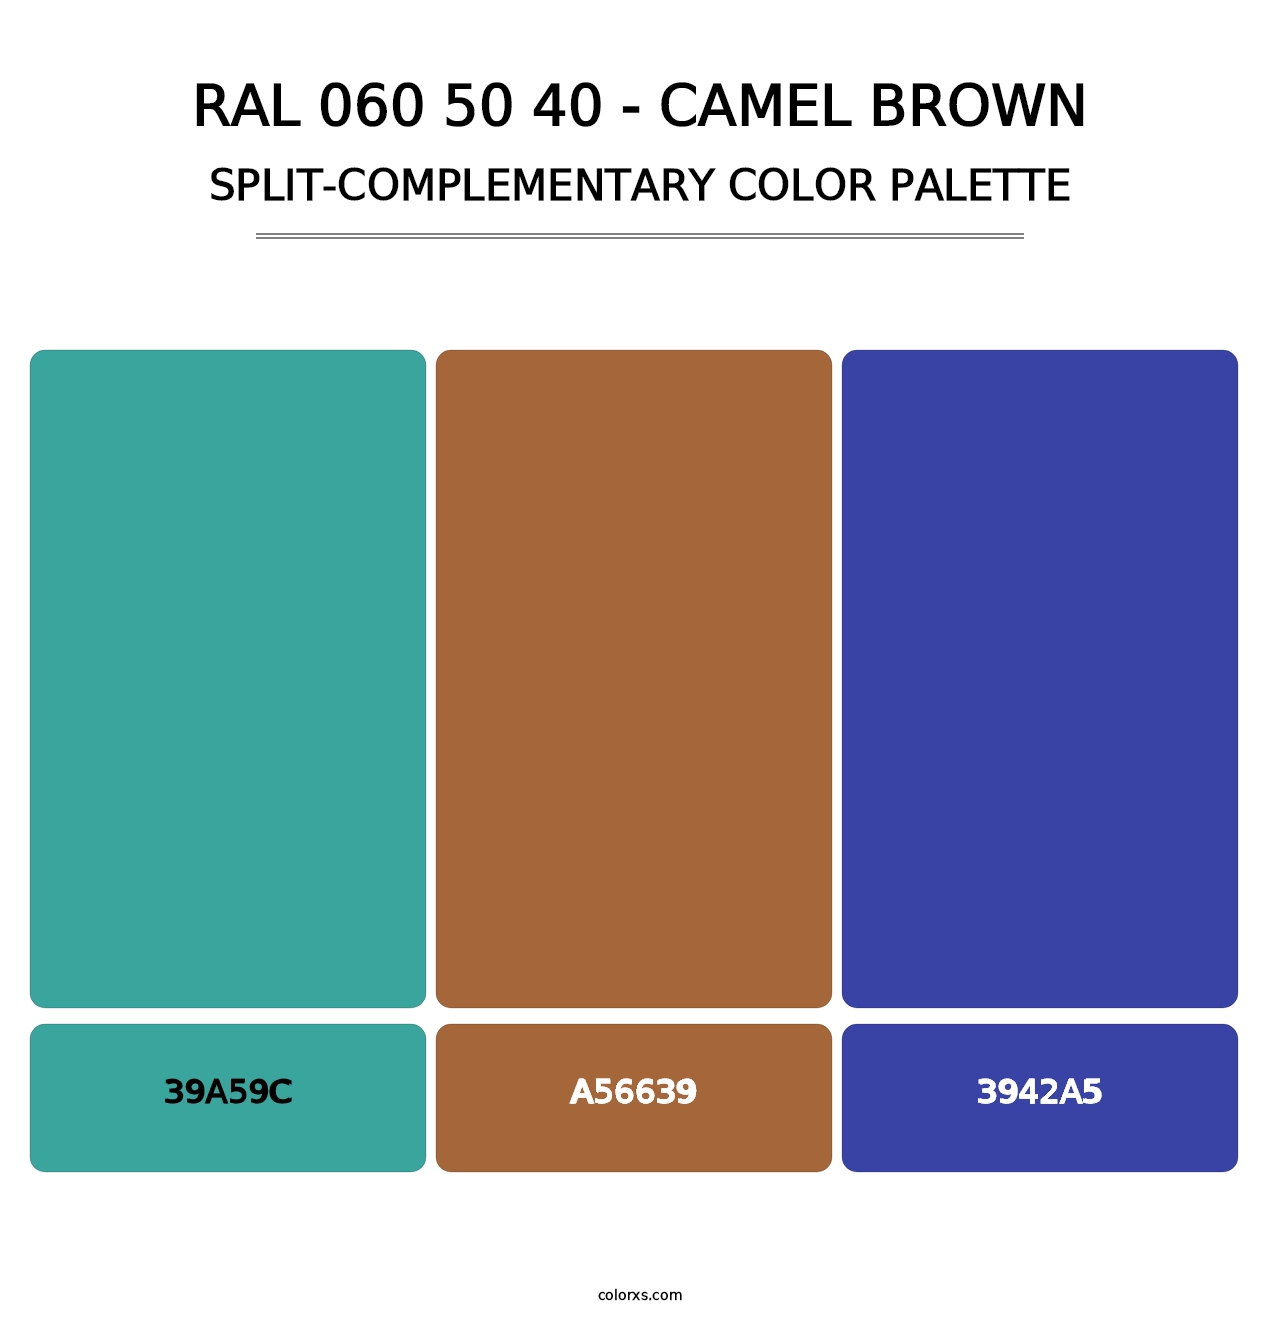 RAL 060 50 40 - Camel Brown - Split-Complementary Color Palette